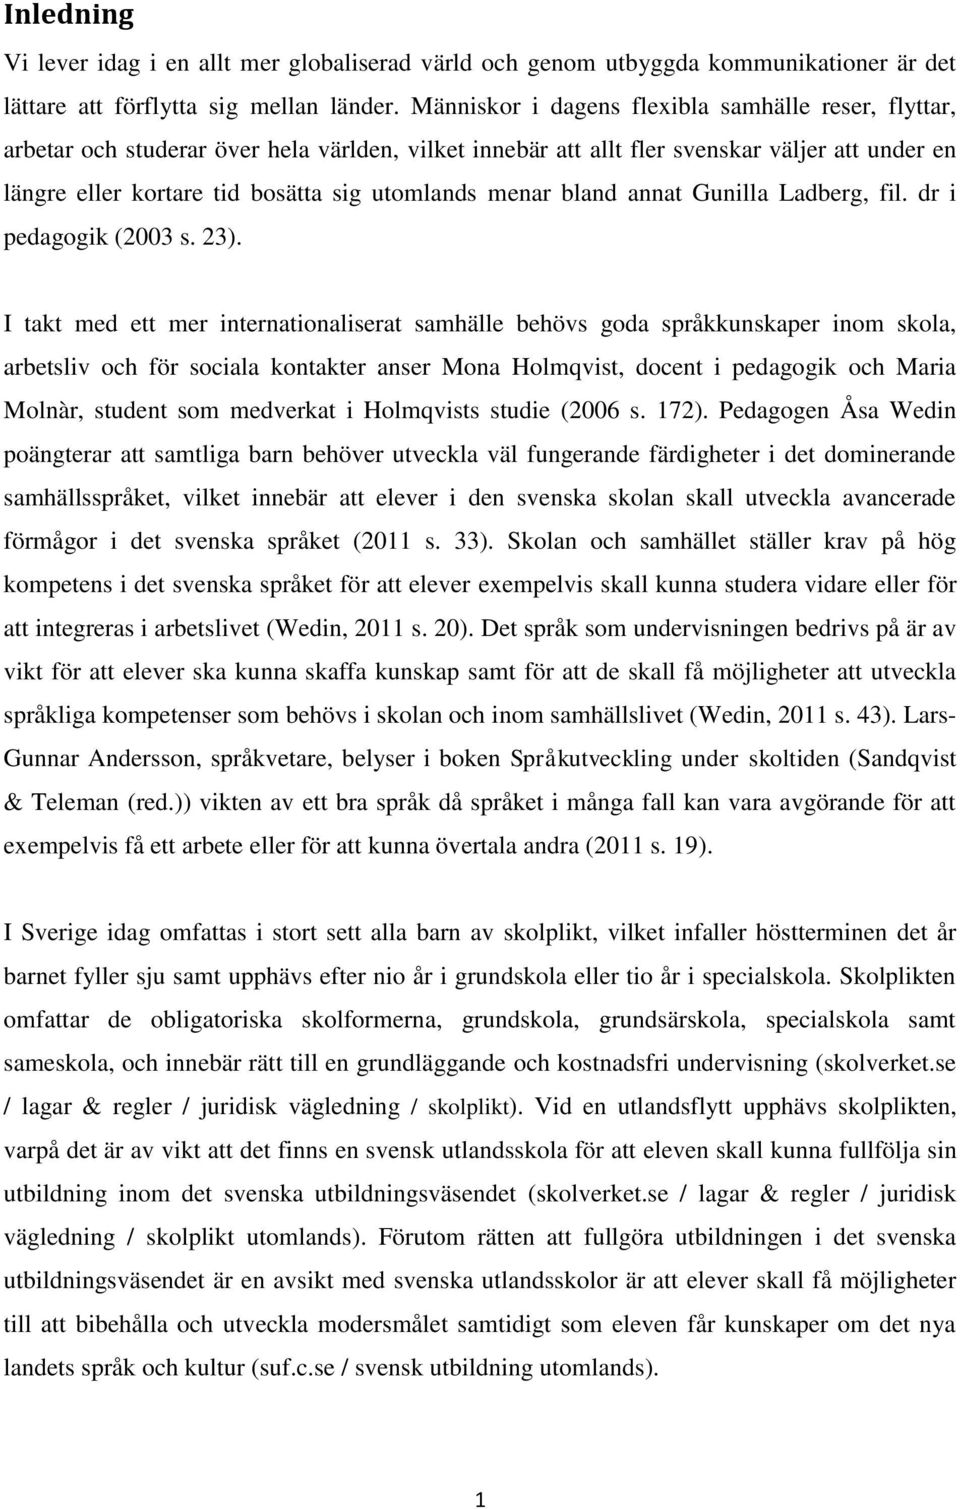 menar bland annat Gunilla Ladberg, fil. dr i pedagogik (2003 s. 23).